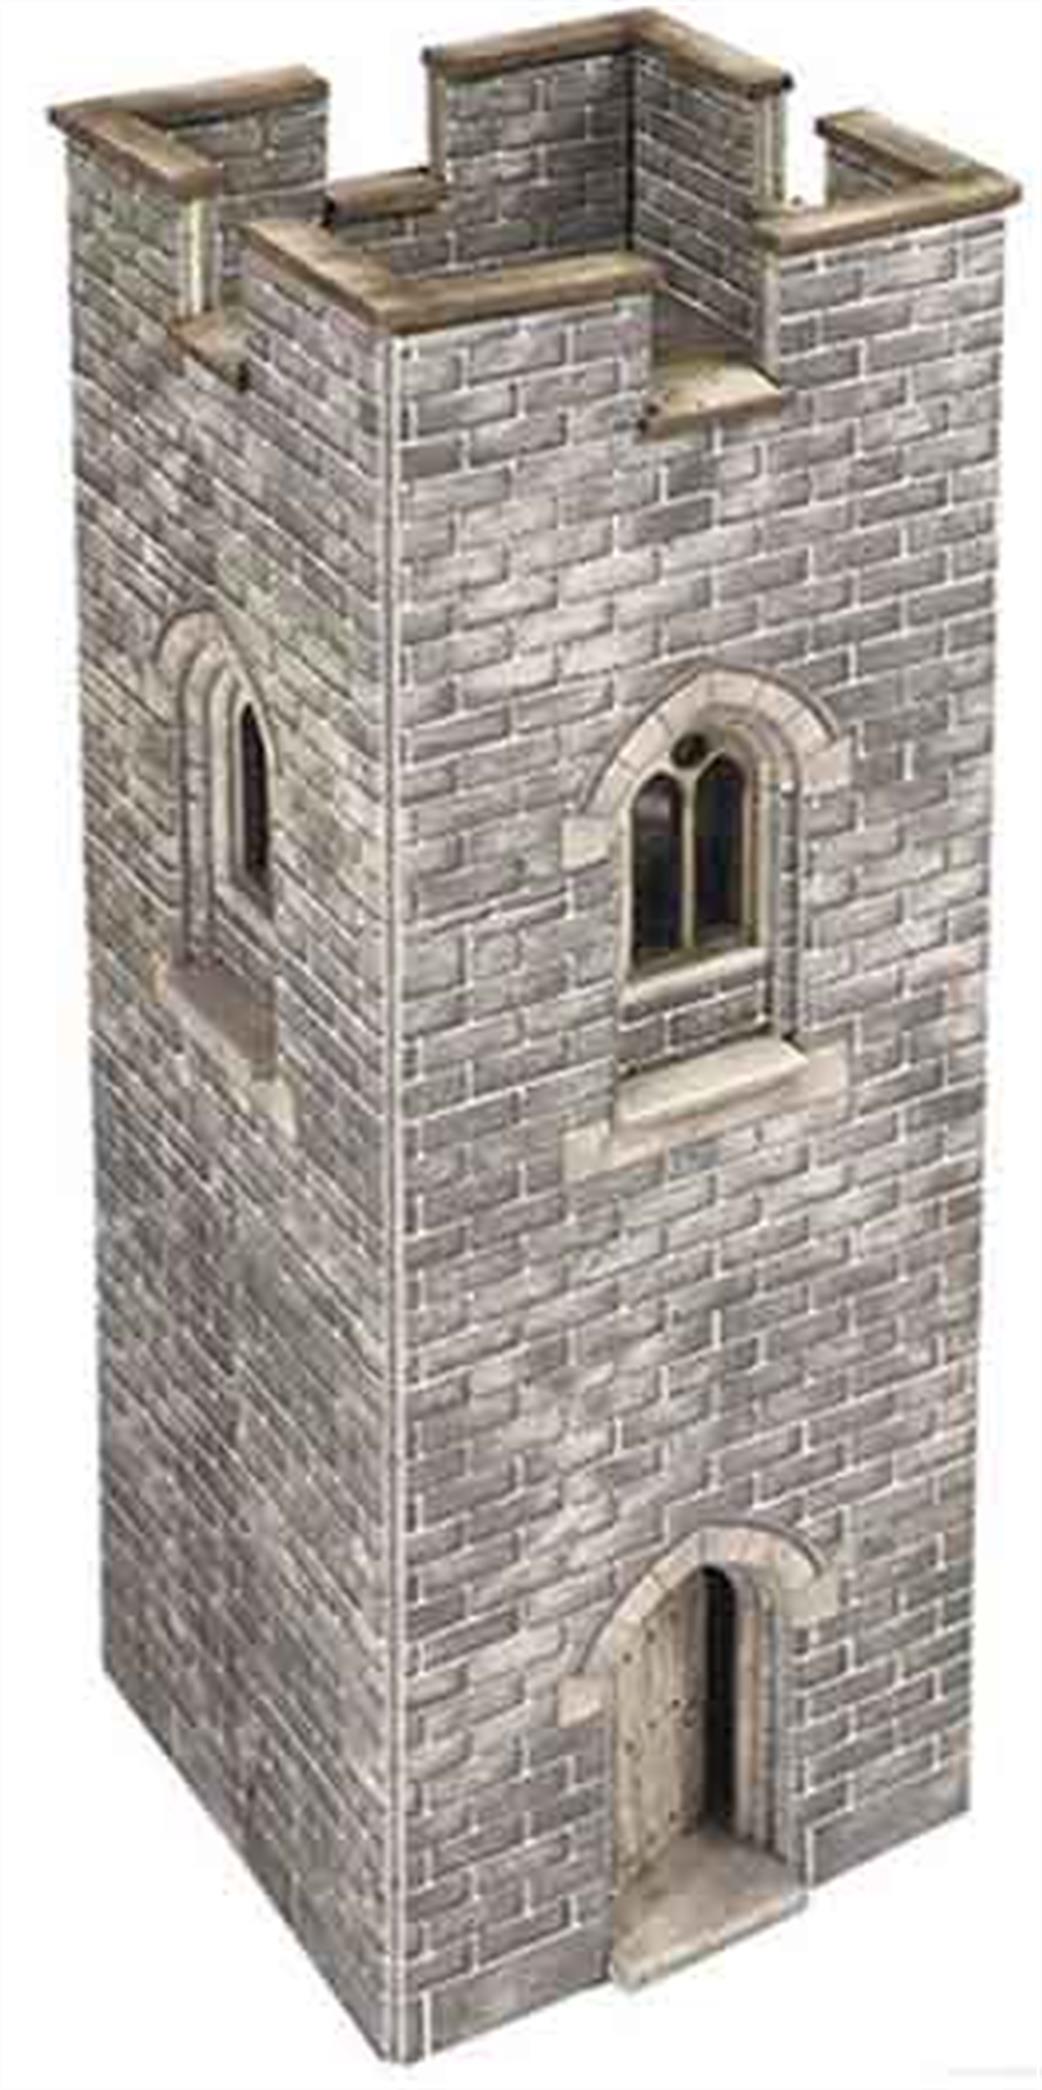 Metcalfe OO PO292 Castle Watch Tower Printed Card Kit